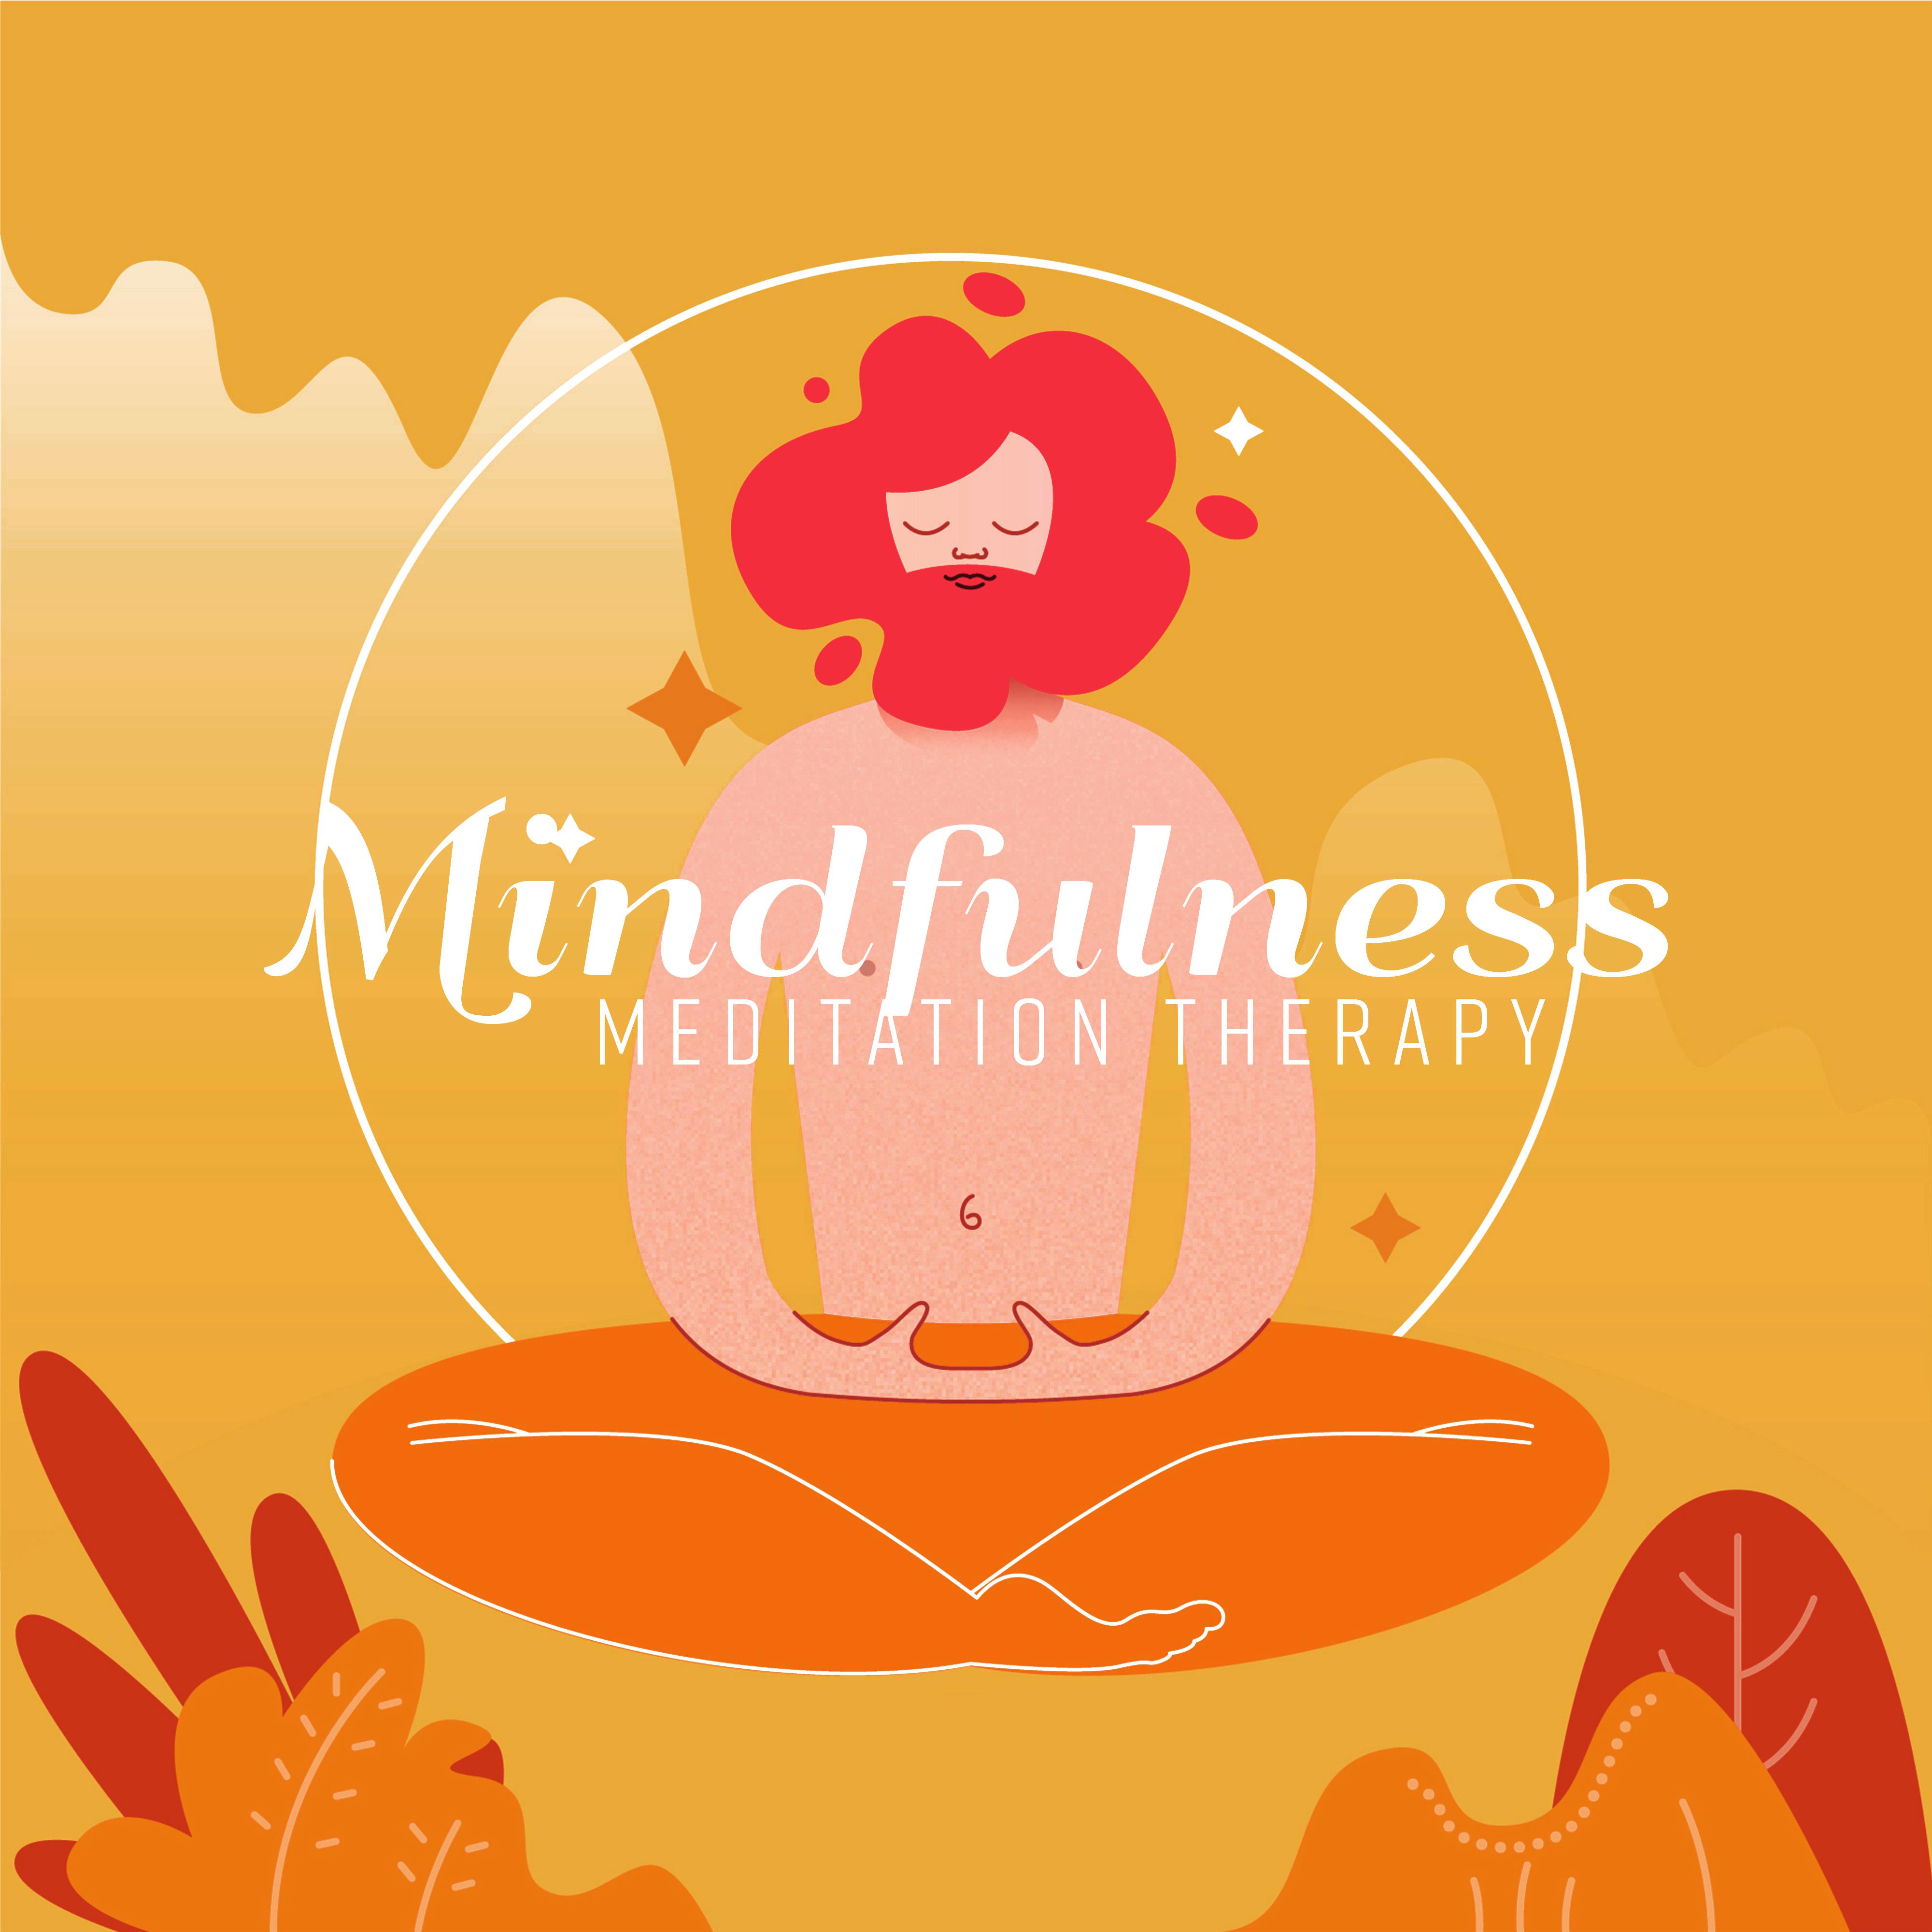 Mindfulness Meditation Therapy